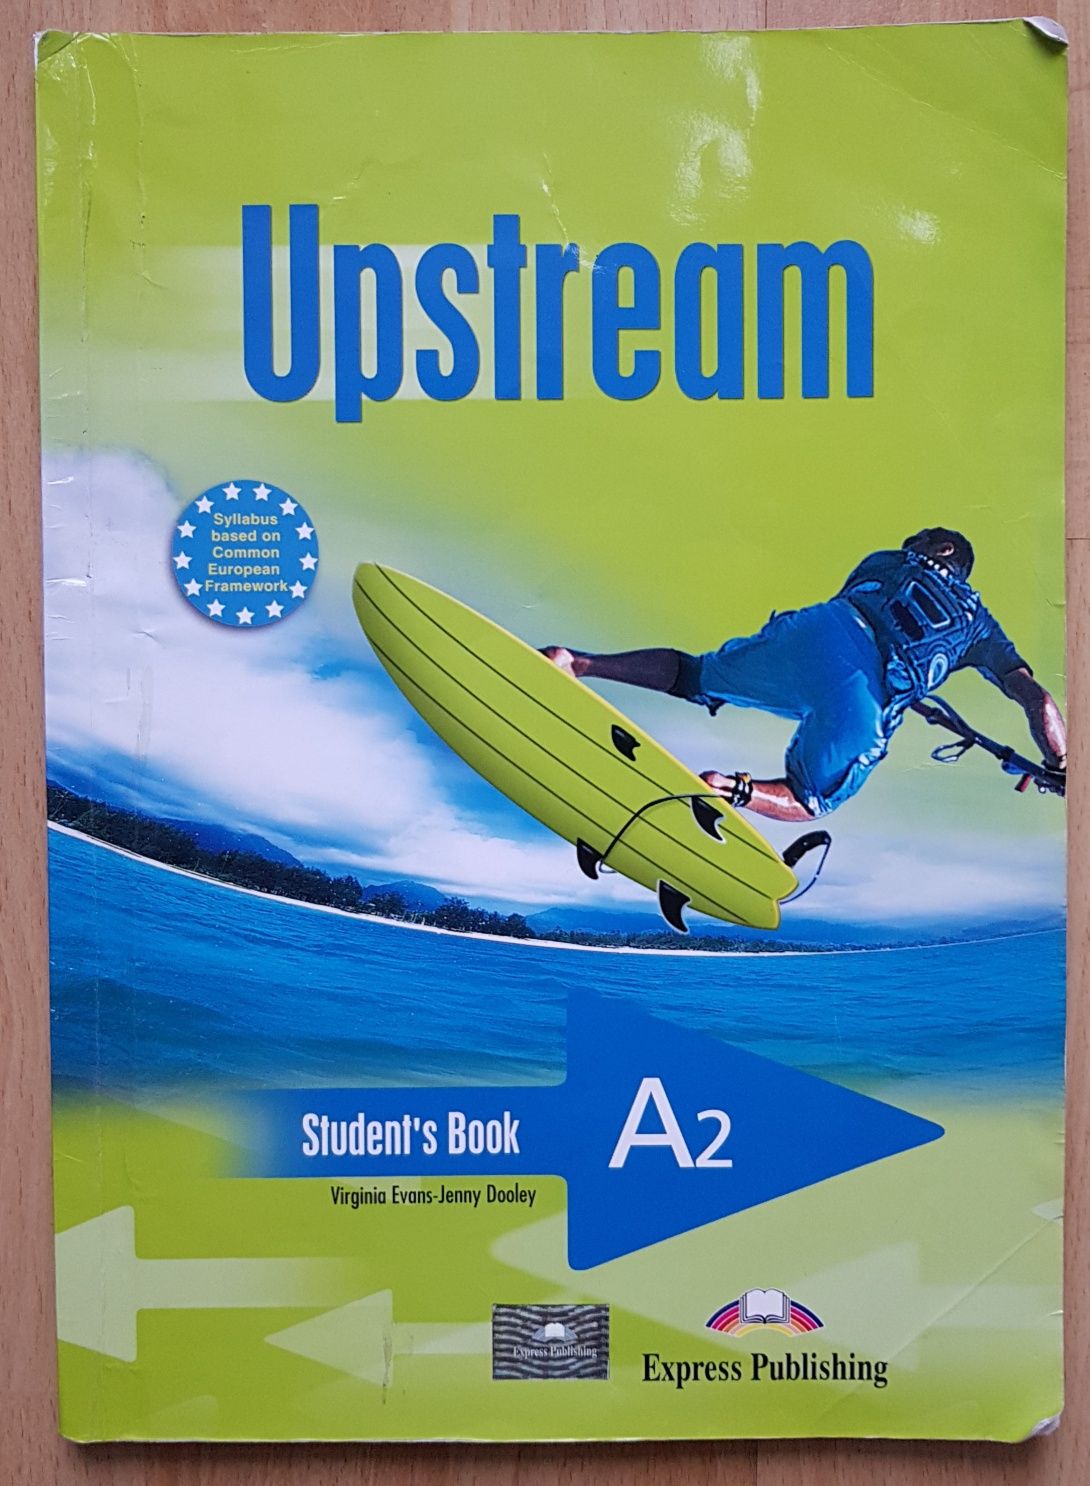 Upstream student's bookA2